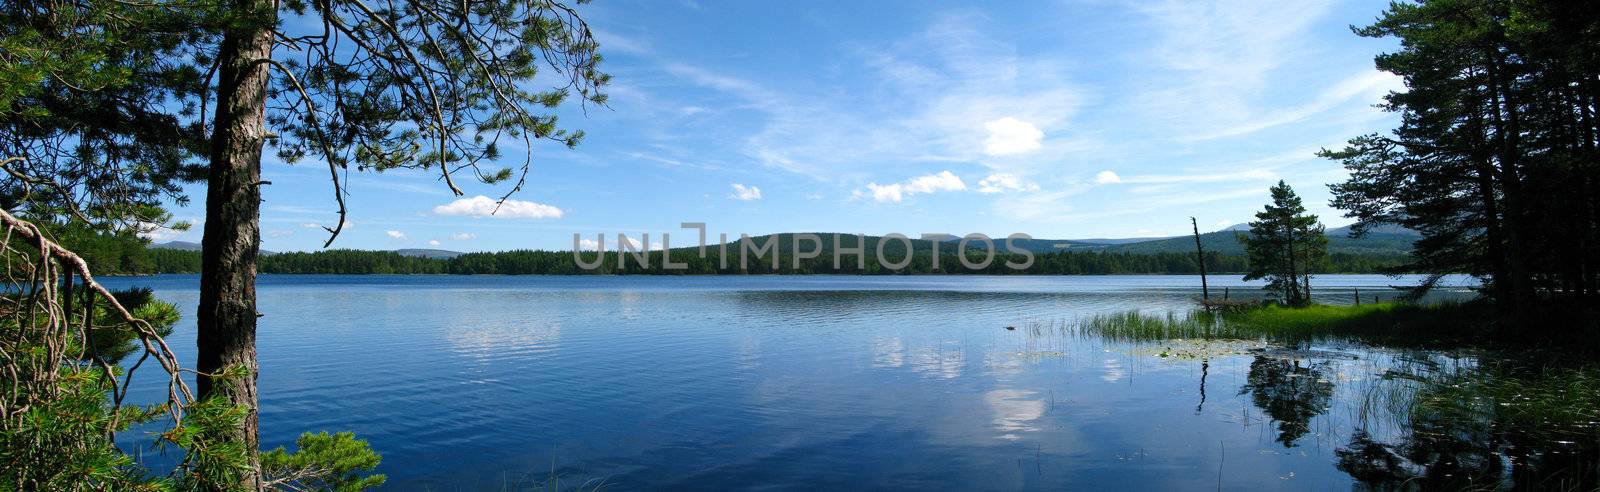 Panorama of three photos stitched of beautiful lake